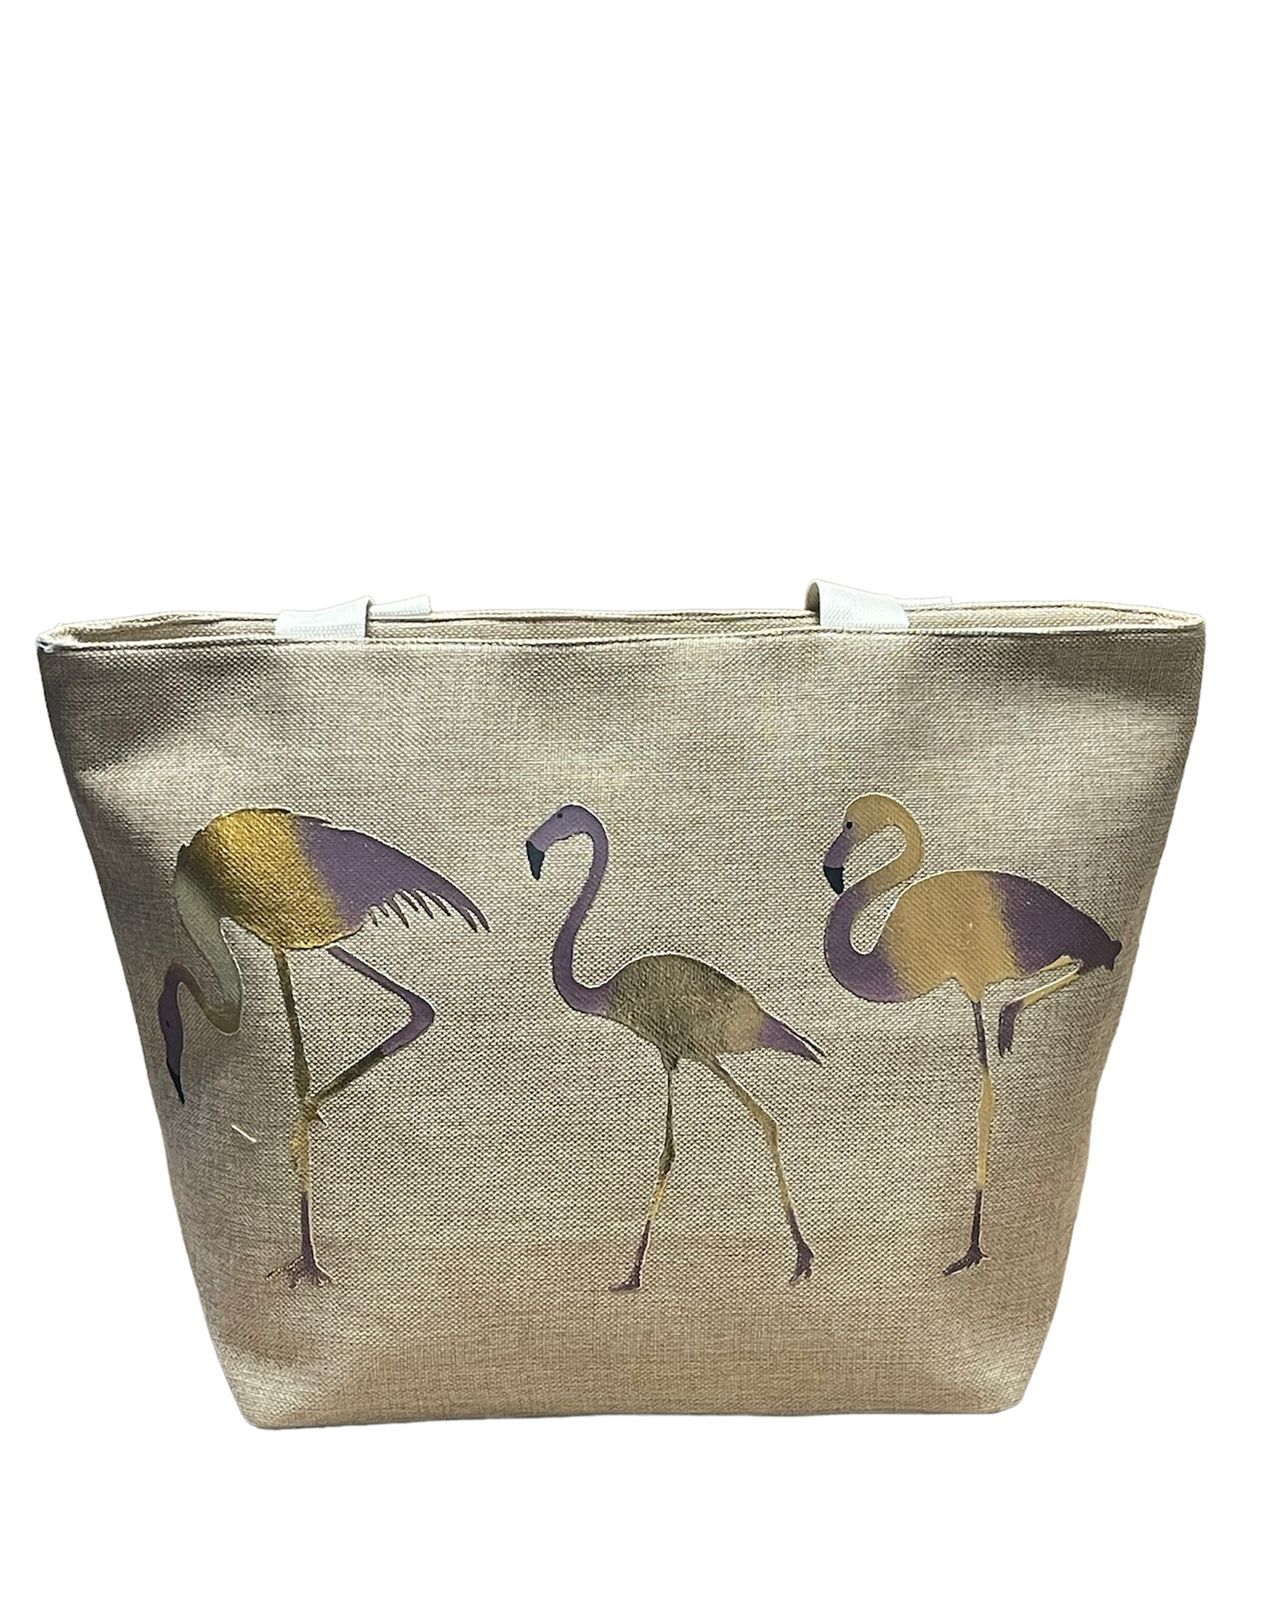 Пляжная сумка женская BAGS-ART Case summer, бежевый фламинго